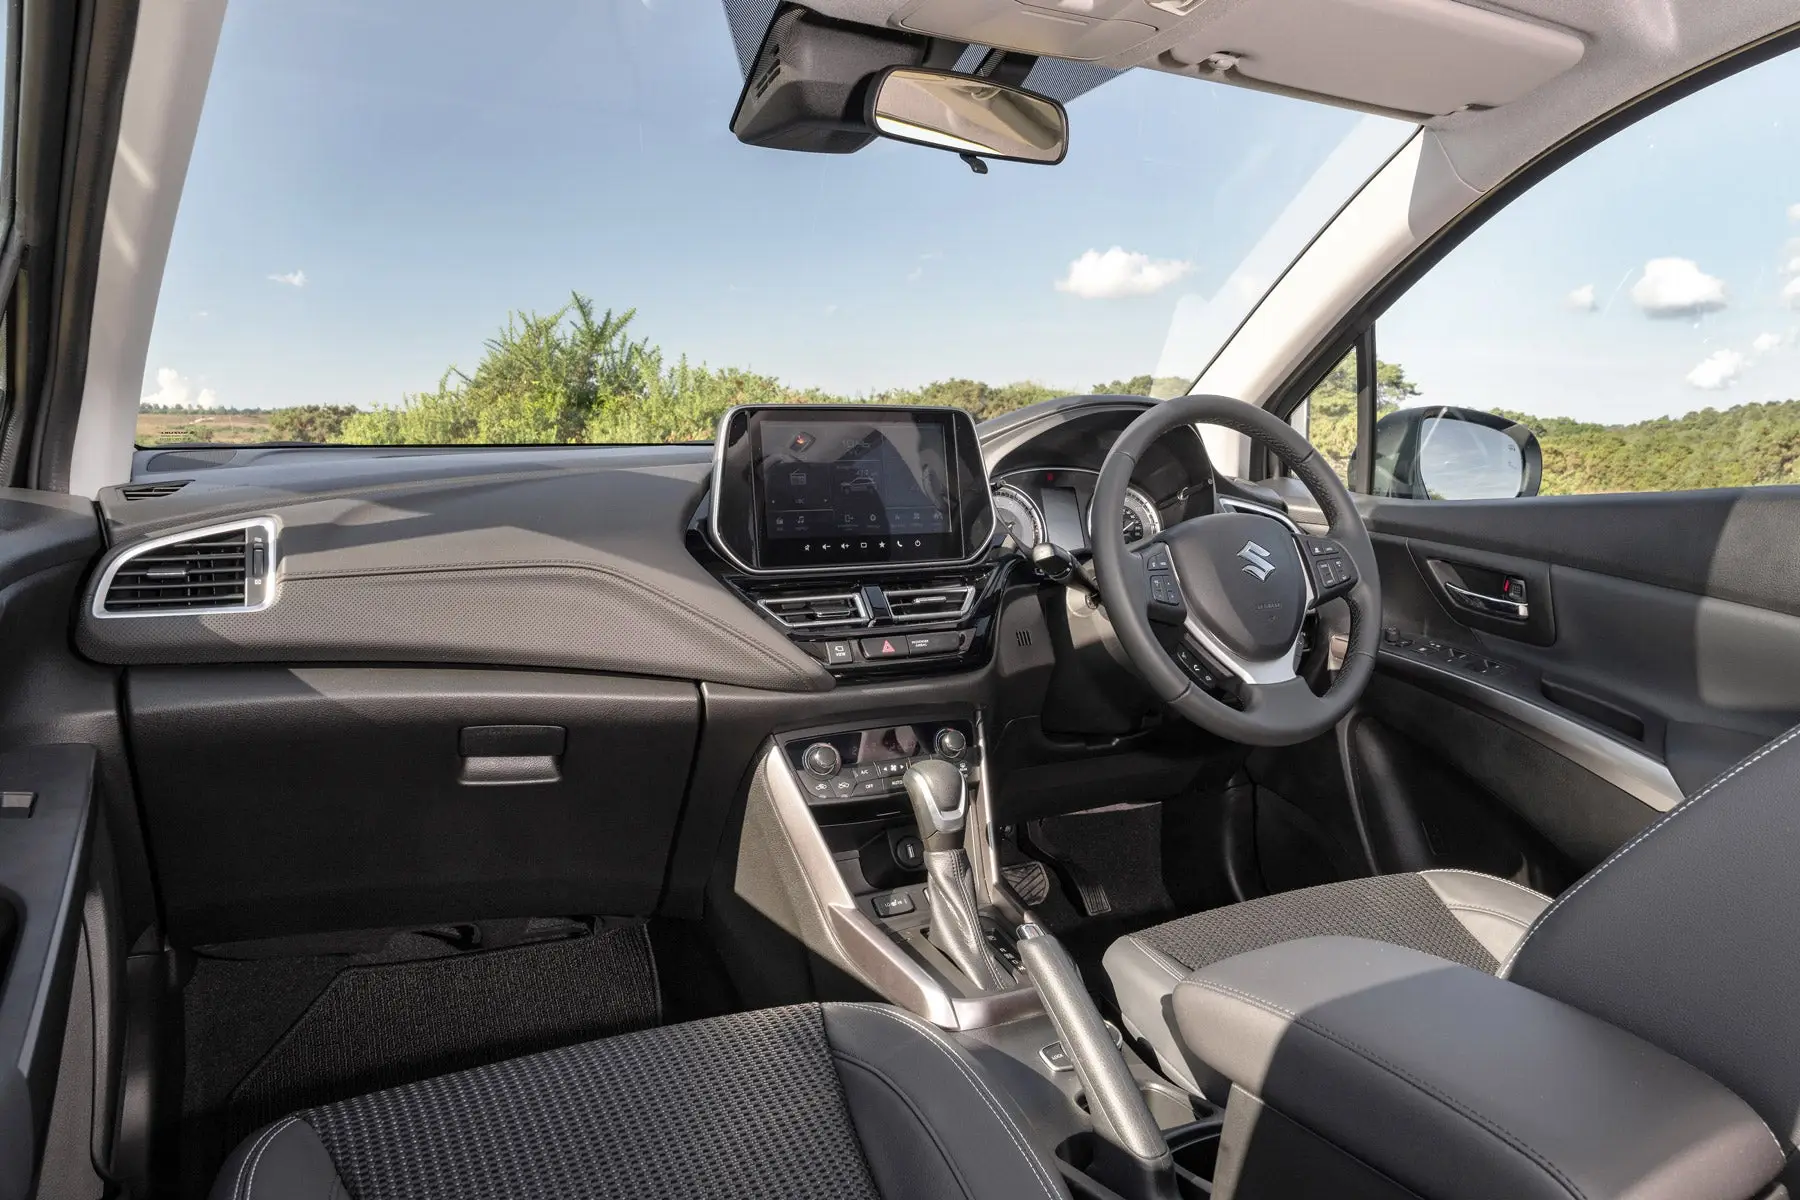 Suzuki S-Cross Review: interior dashboard